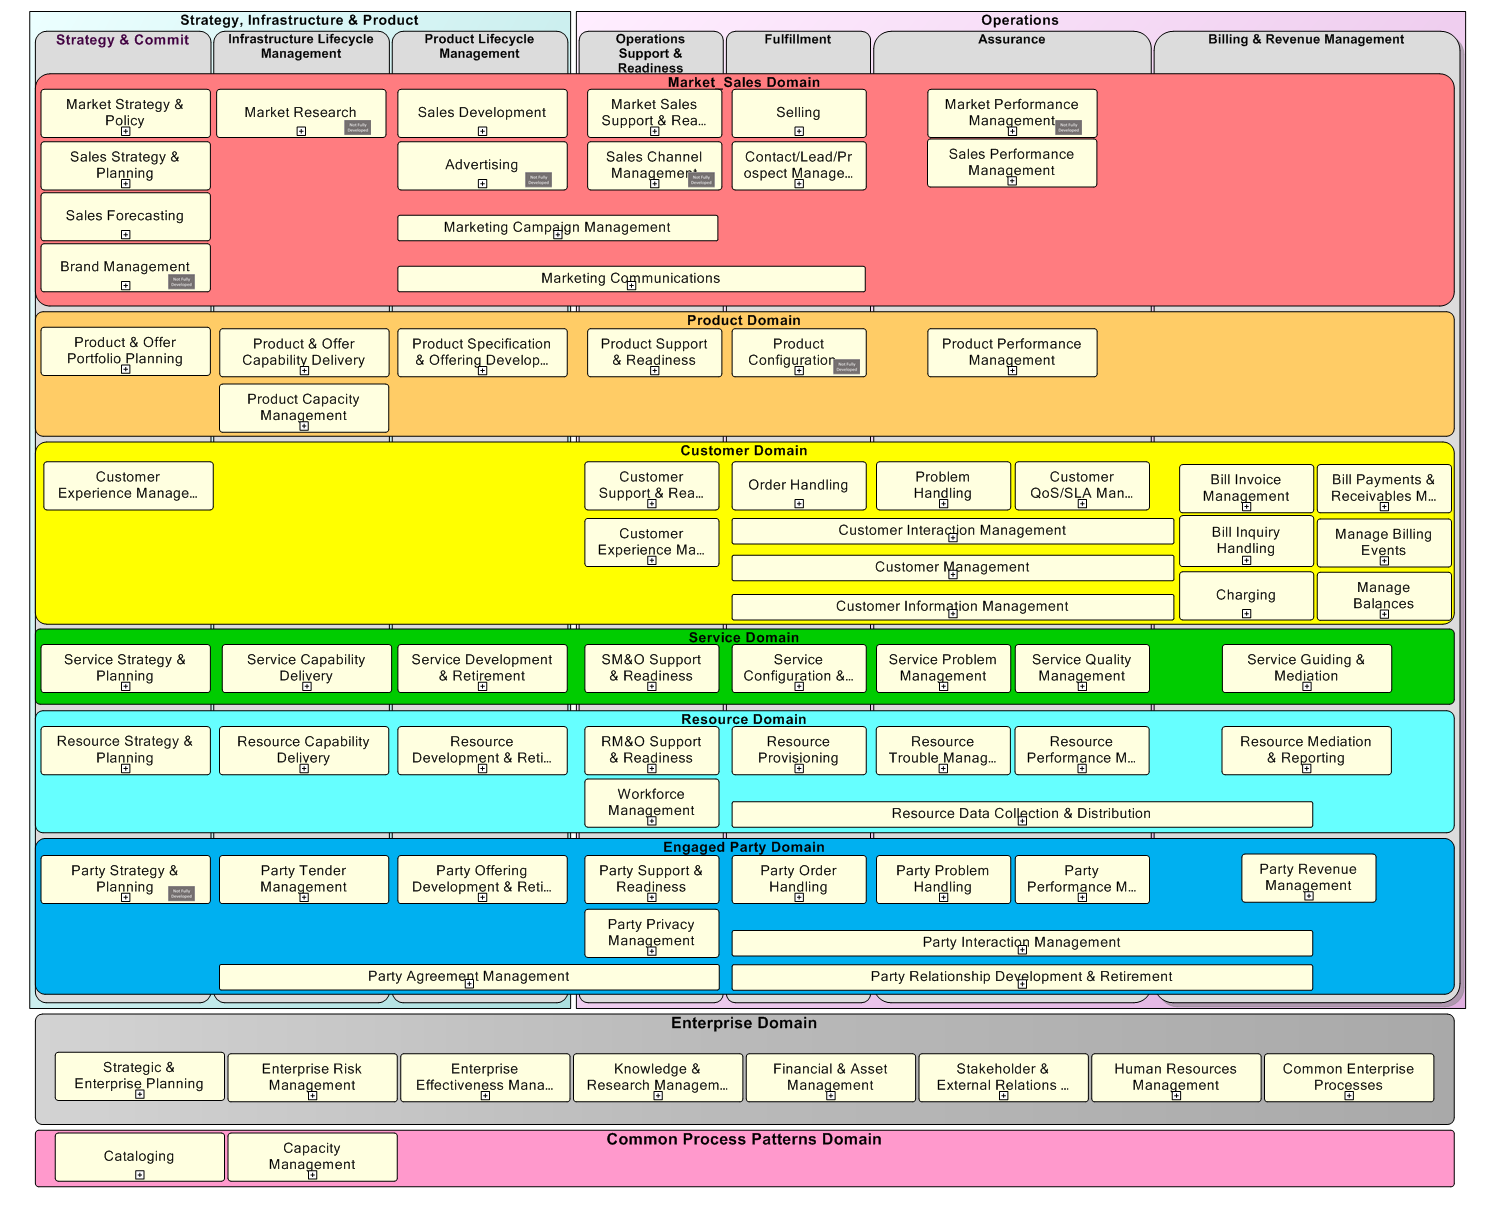 Business Process Framework Level 1 Overview - START HERE